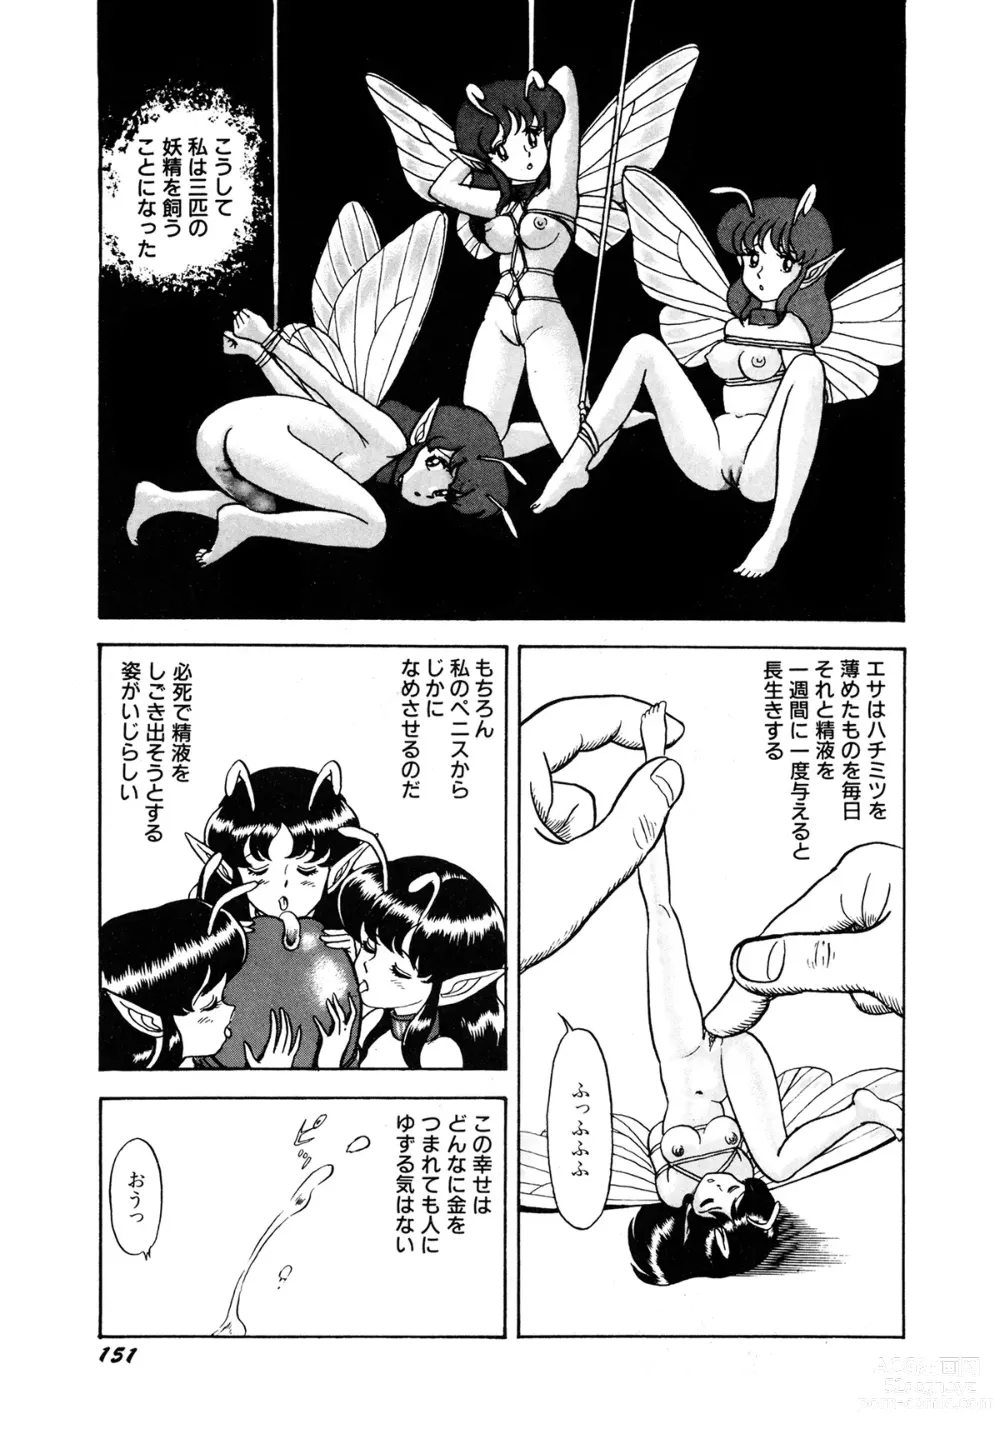 Page 154 of manga Insect Hunter